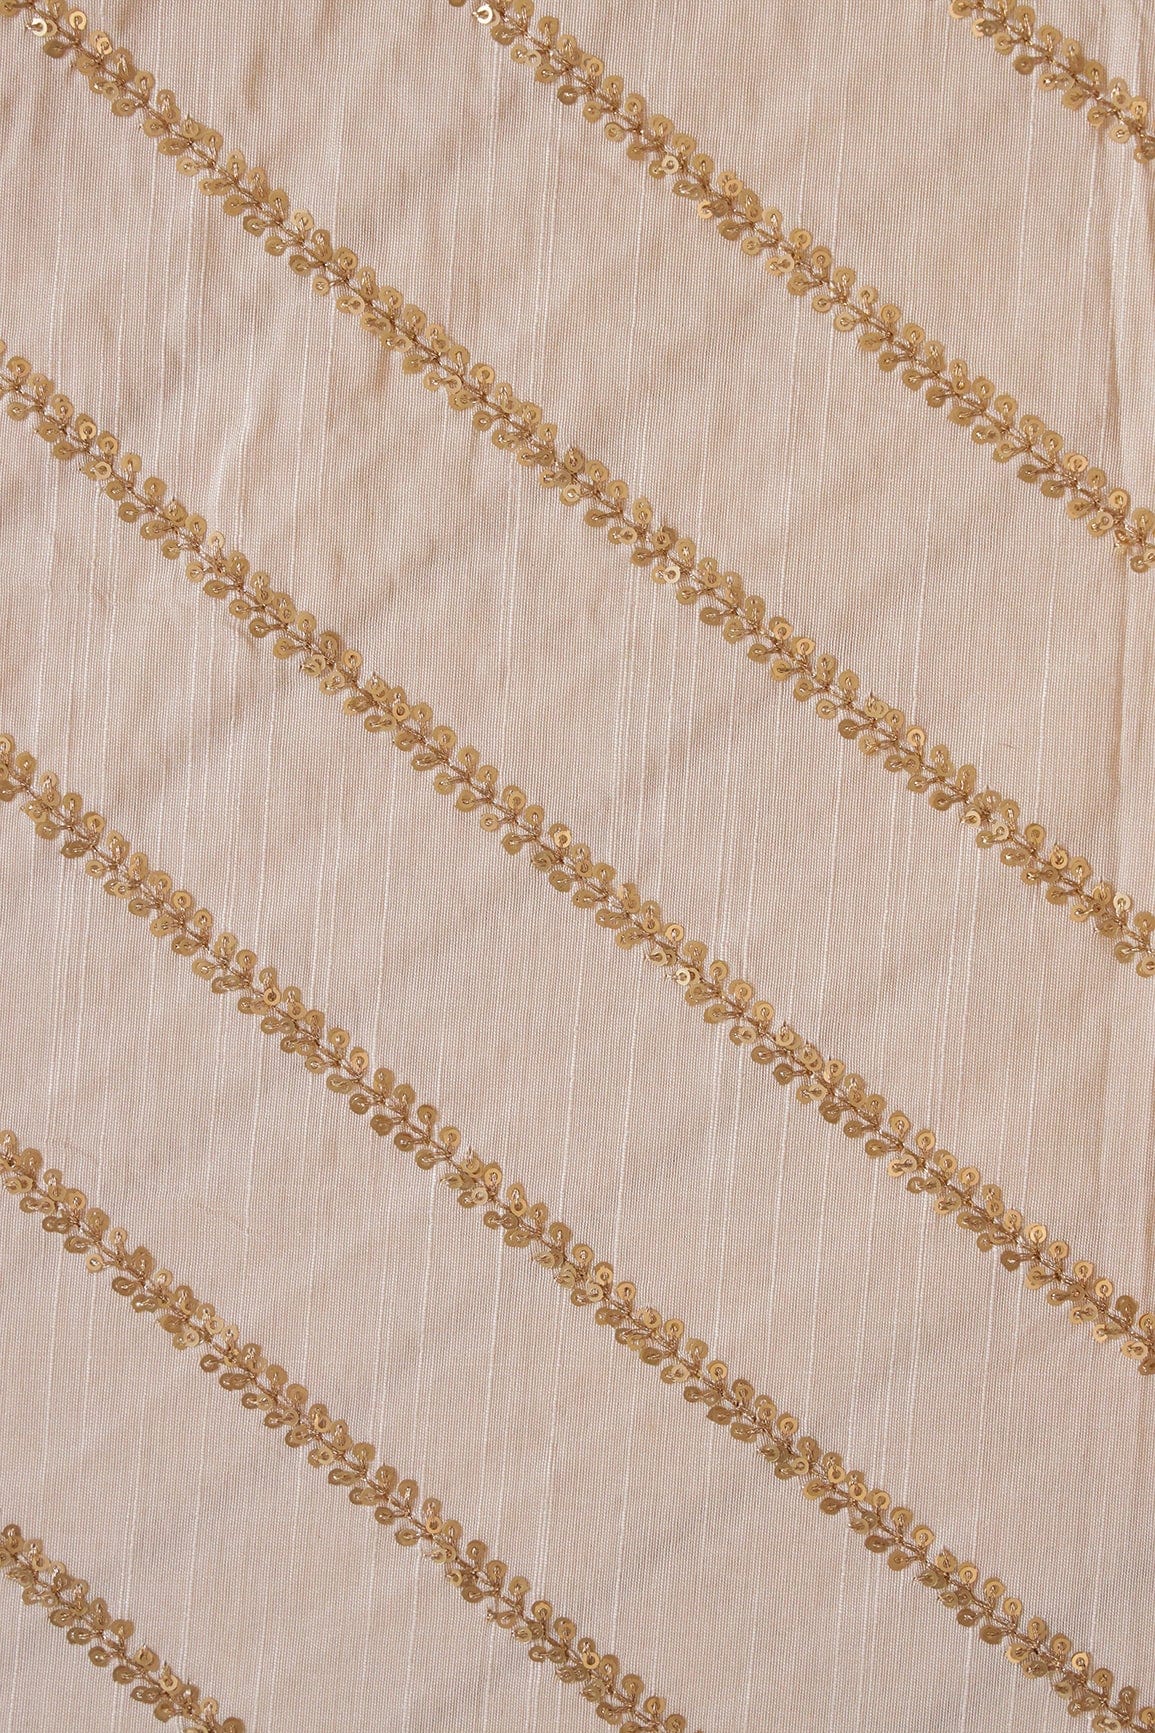 doeraa LEHENGA SET Copy of Off White and Sky Blue Unstitched Lehenga Set Fabric (3 Piece)